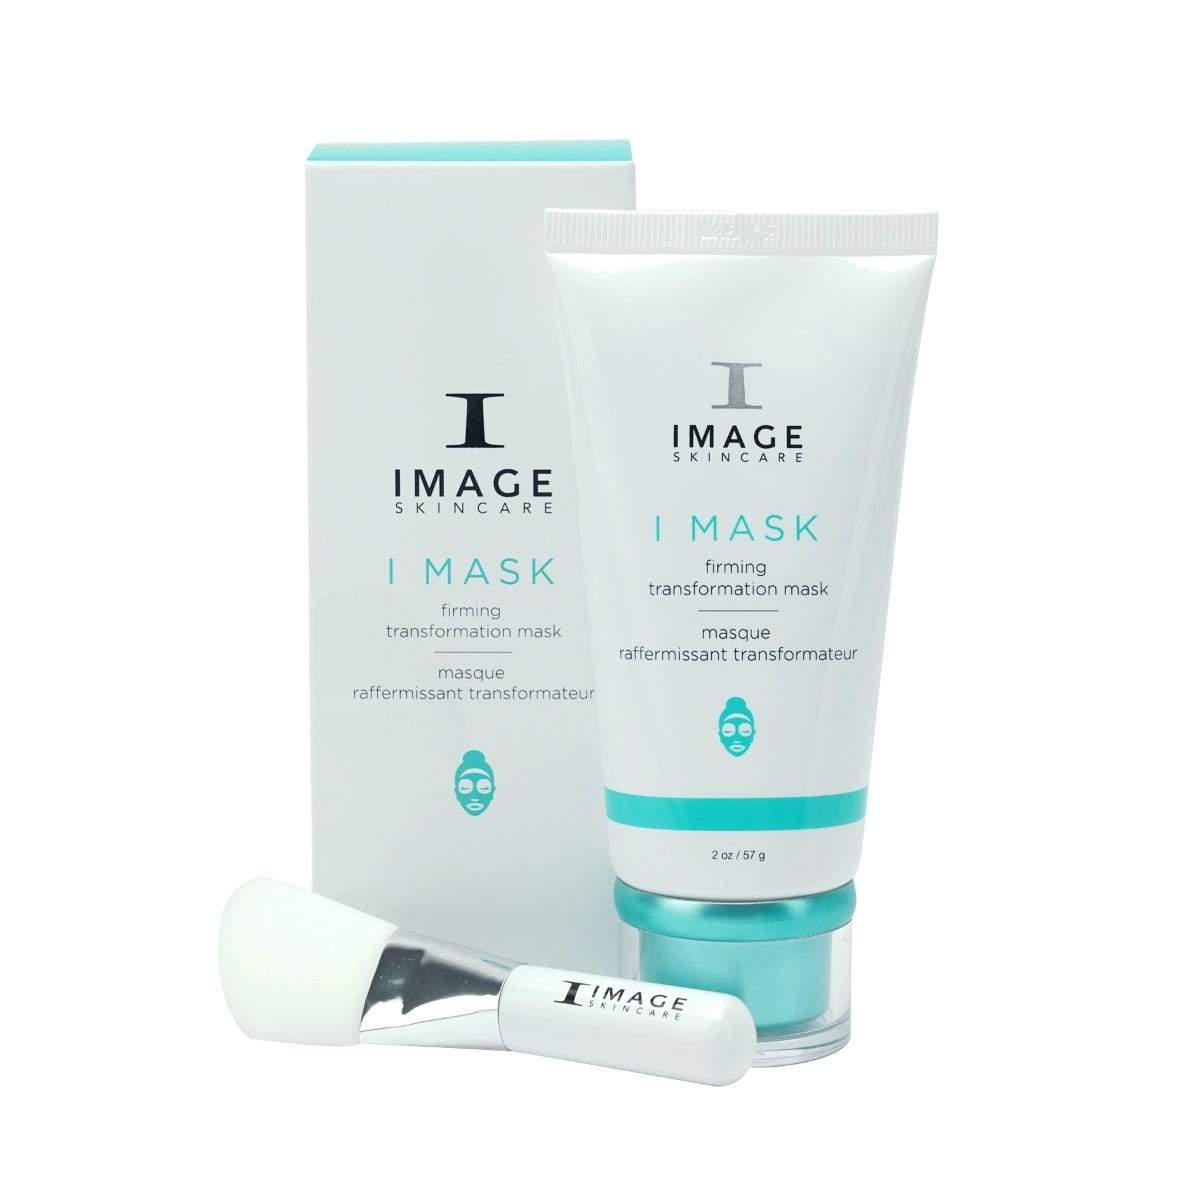 I MASK firming transformation mask - The Skin Beauty Shoppe